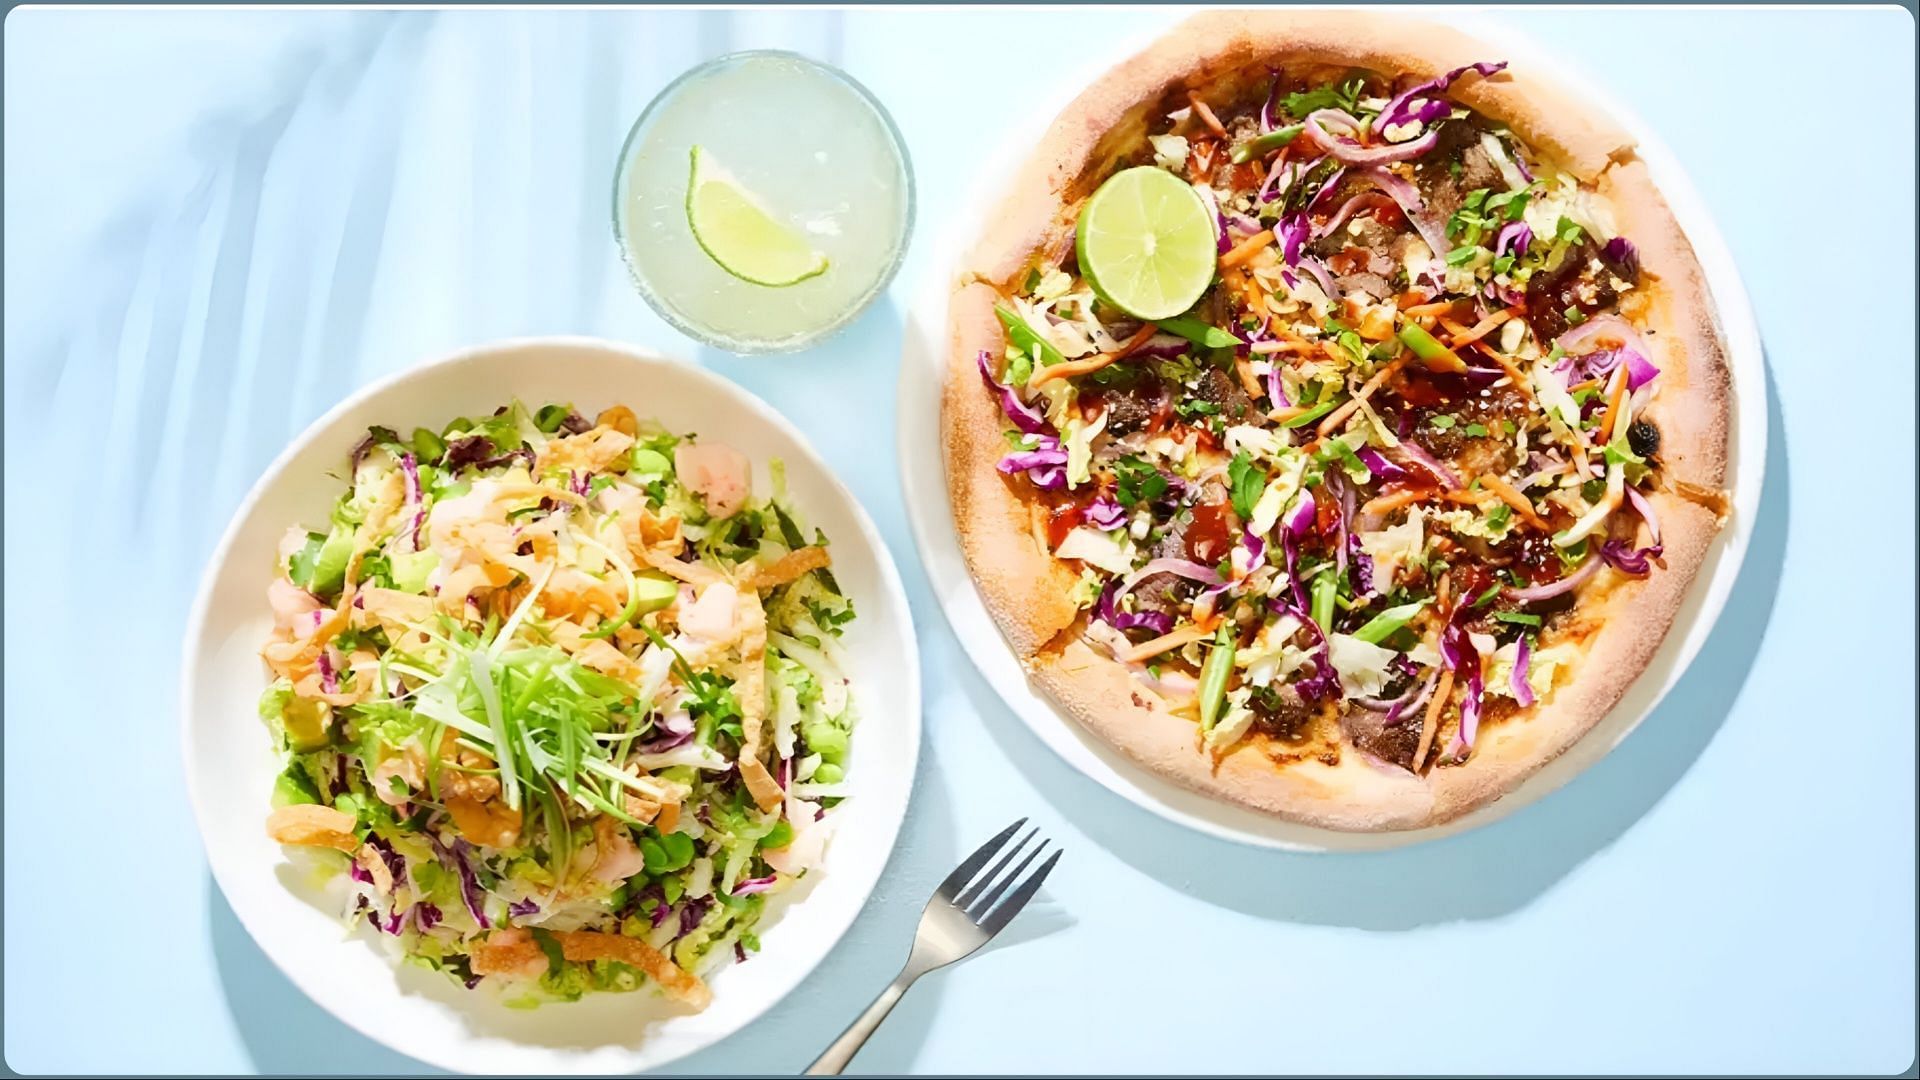 California Pizza Kitchen introduces a seasonal menu with three new items (Image via California Pizza Kitchen)